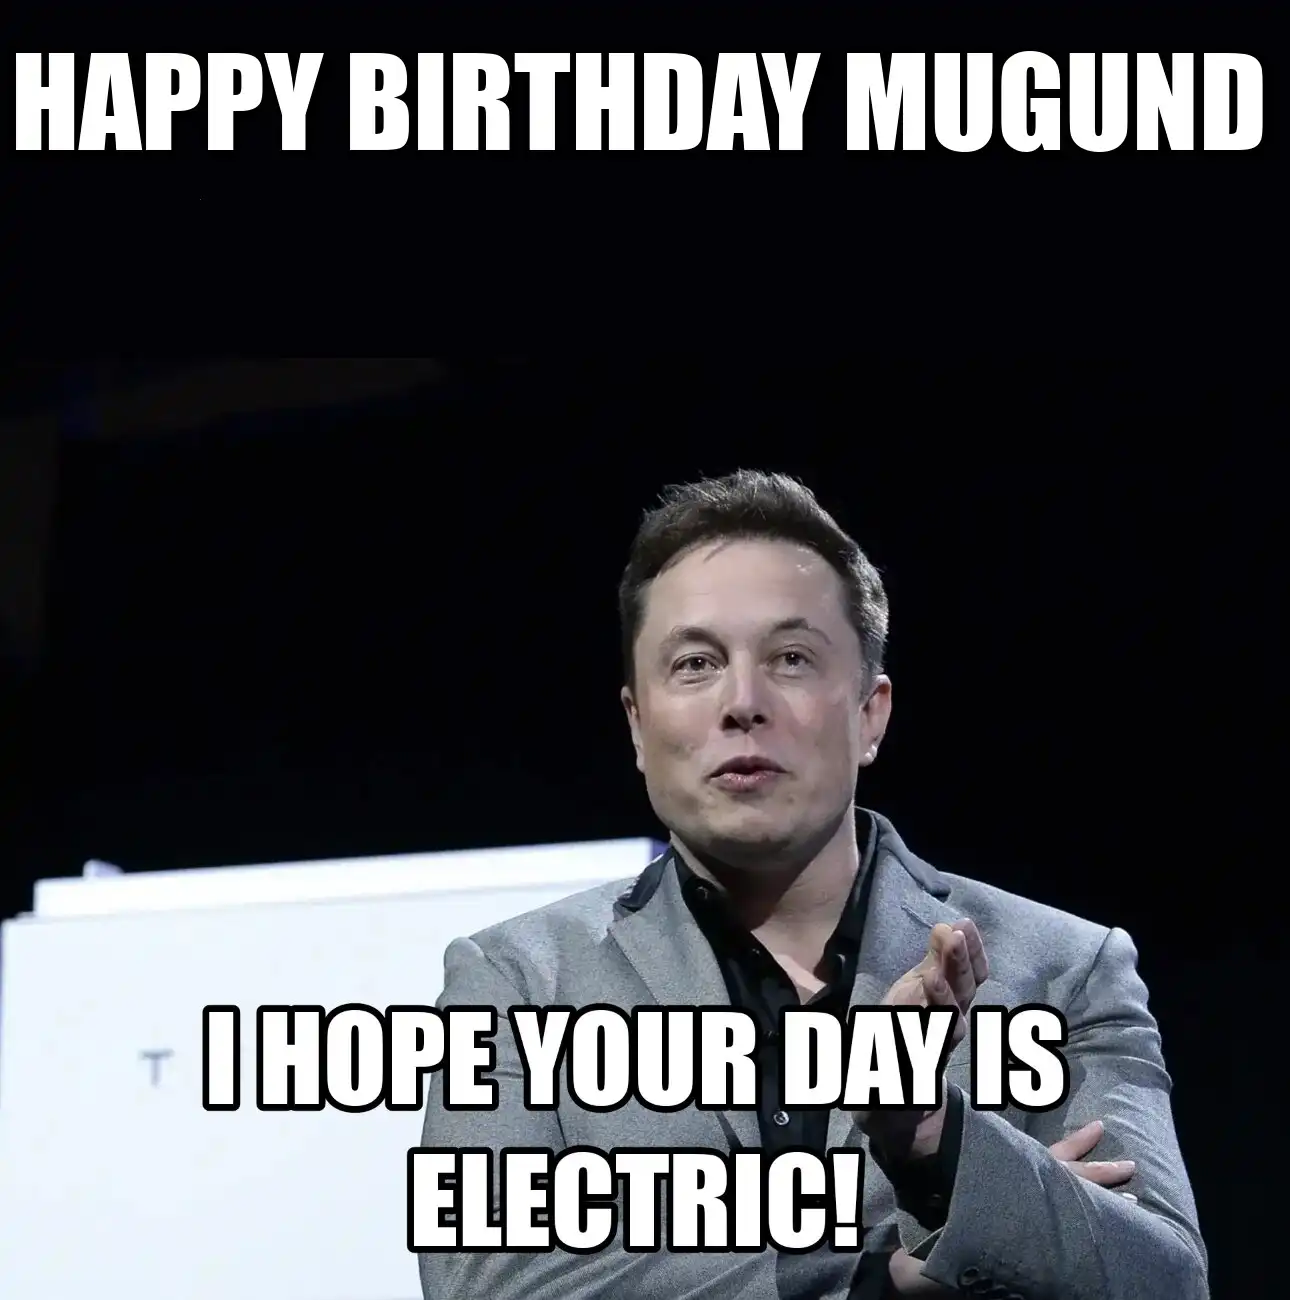 Happy Birthday Mugund I Hope Your Day Is Electric Meme